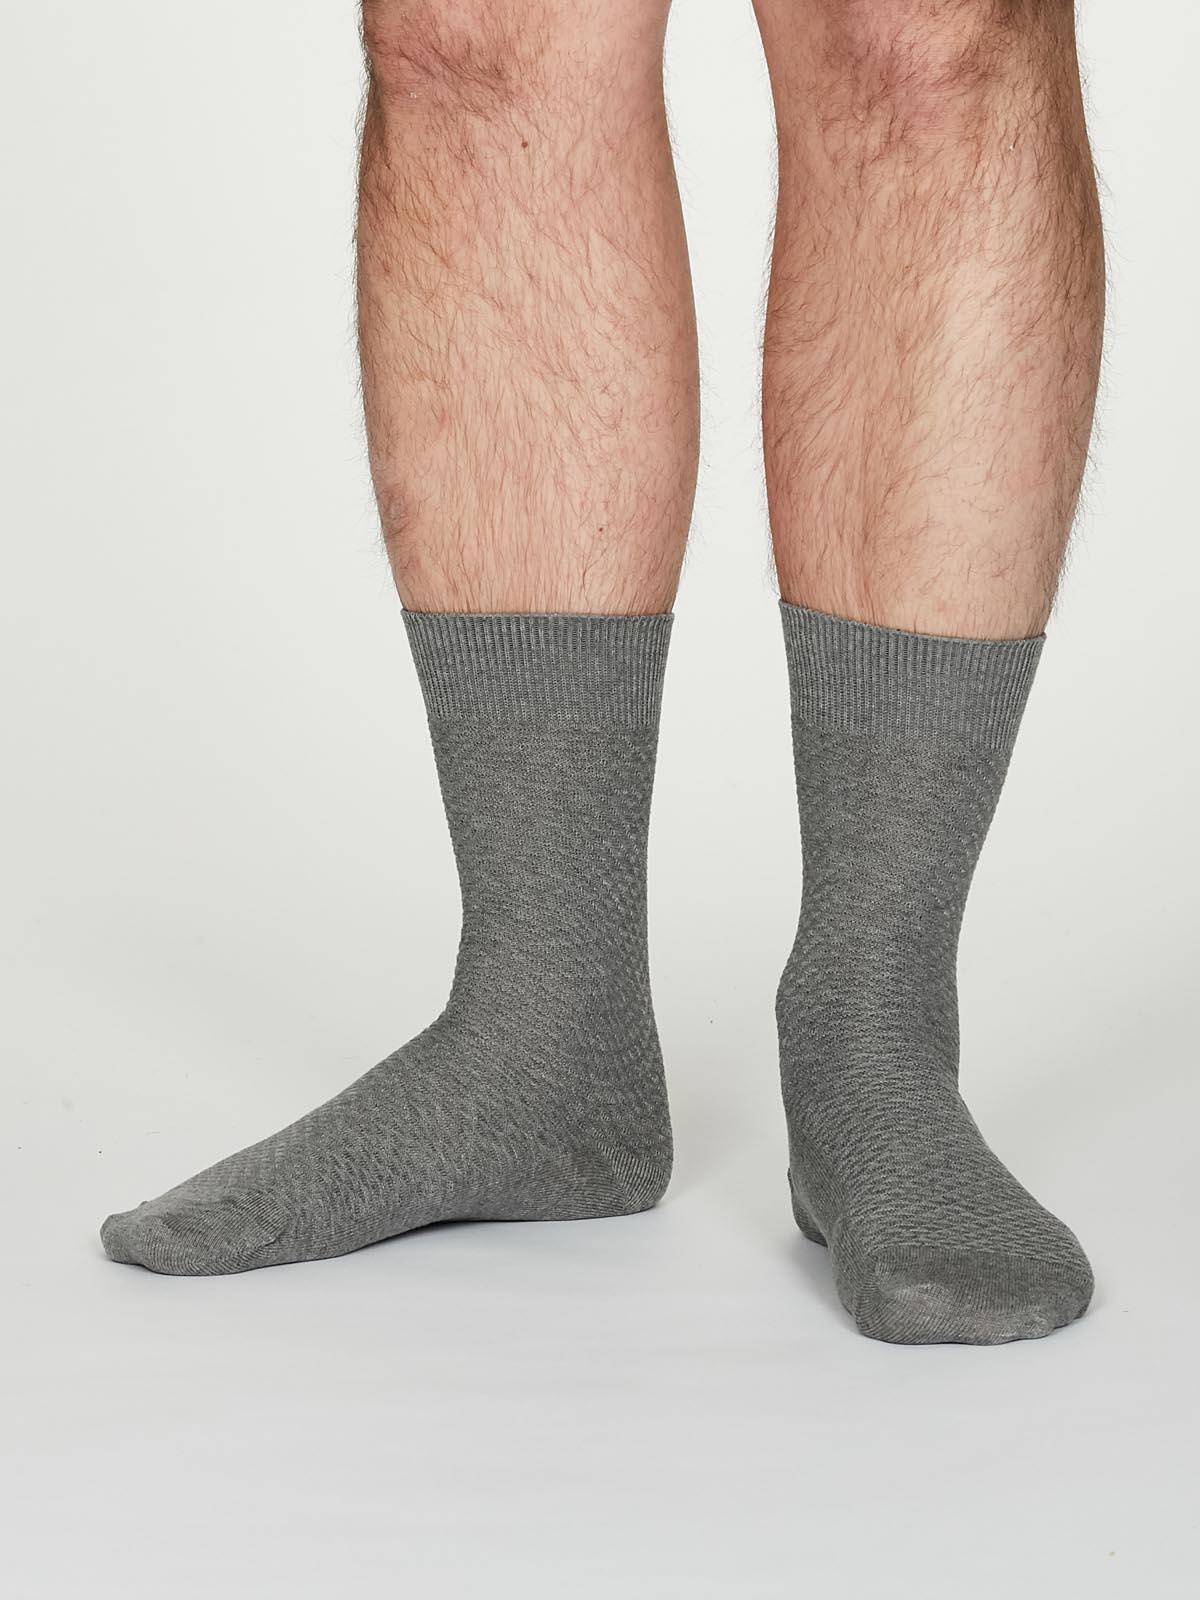 Geoffrey Organic Cotton Suit Socks - Mid Grey Marle - Thought Clothing UK